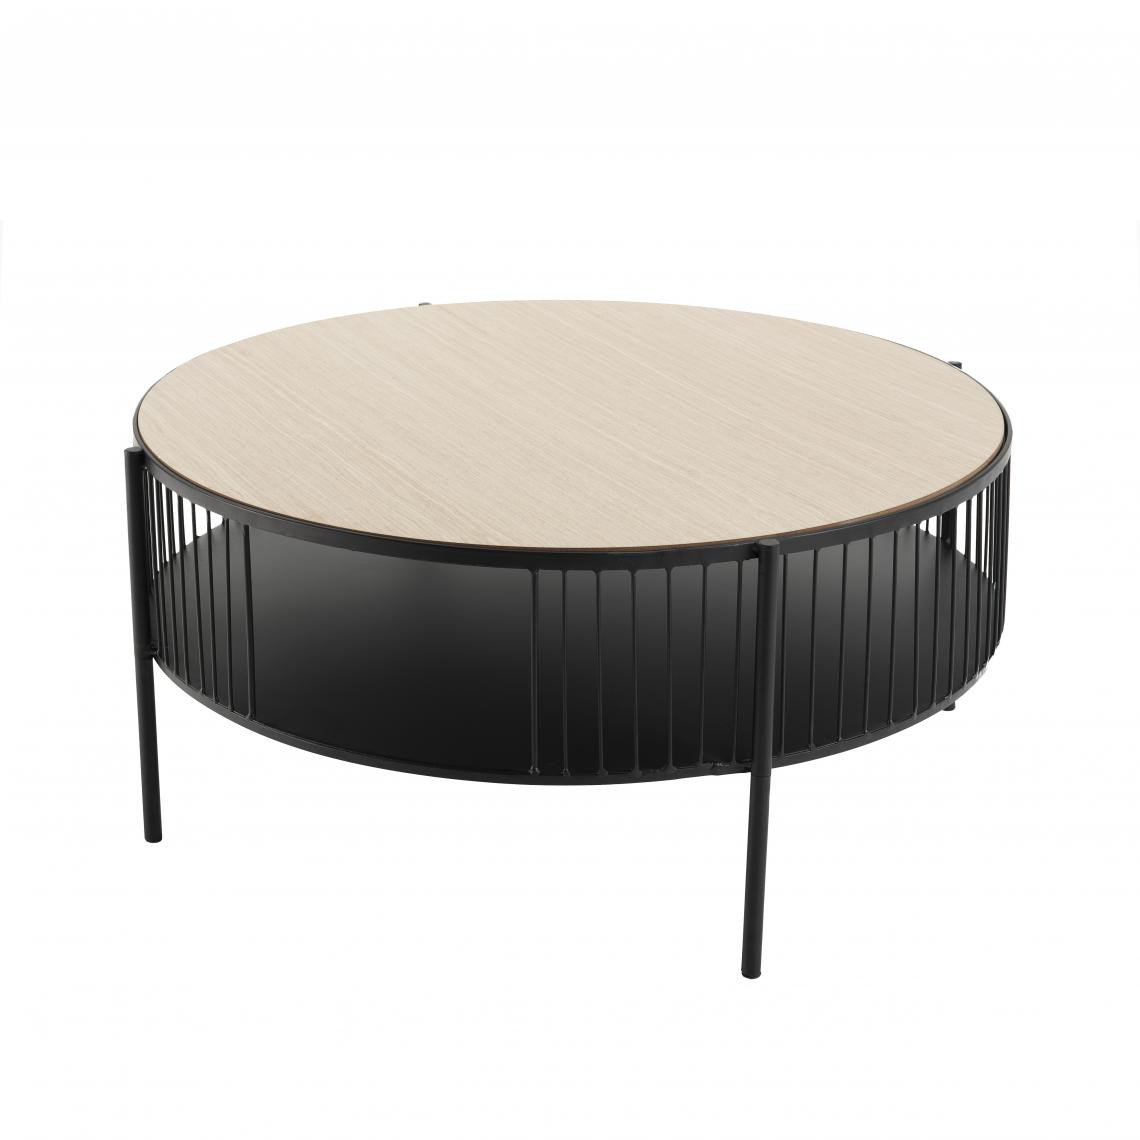 MACABANE - Table basse ronde double plateau 80 cm métal - TALYA - Tables basses